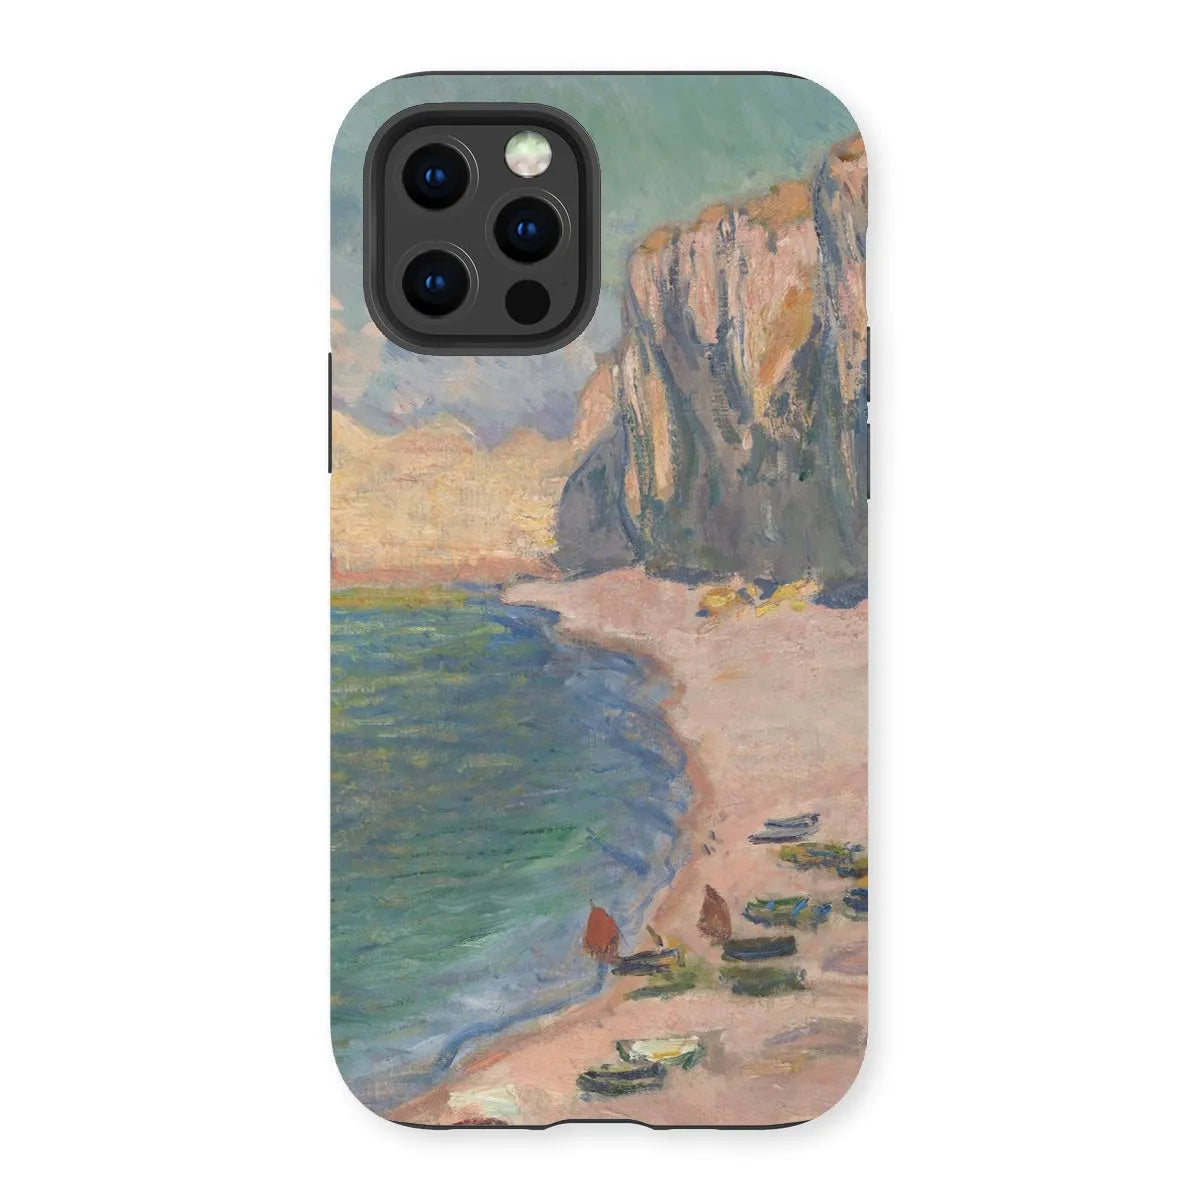 étretat - Impressionist Art Phone Case - Claude Monet - Iphone 13 Pro / Matte - Mobile Phone Cases - Aesthetic Art